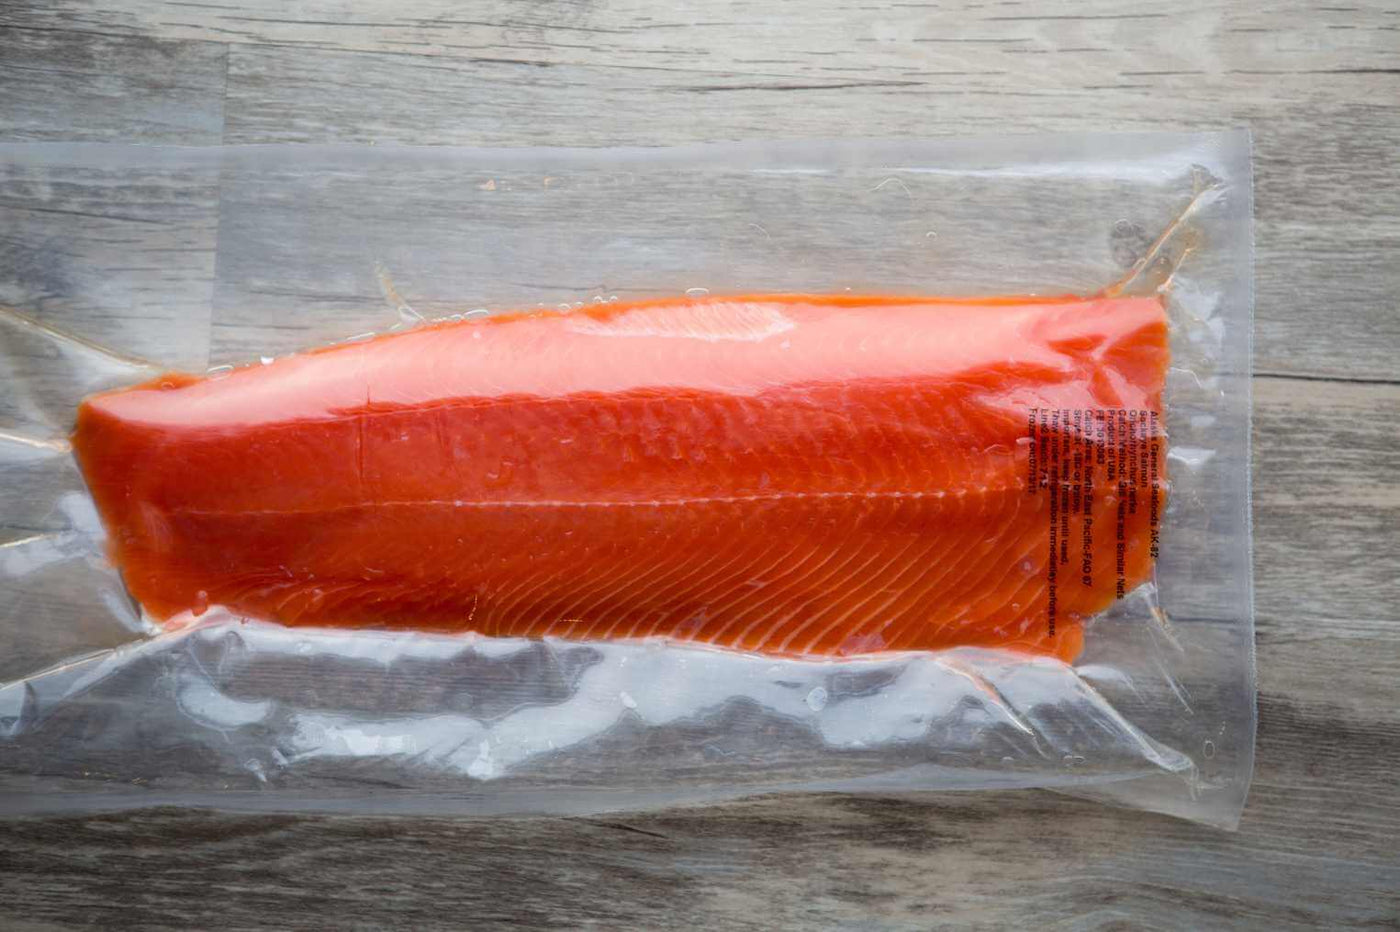 Kwee-Jack Fish Co. vacuum sealed wild caught Alaskan sockeye salmon filet.